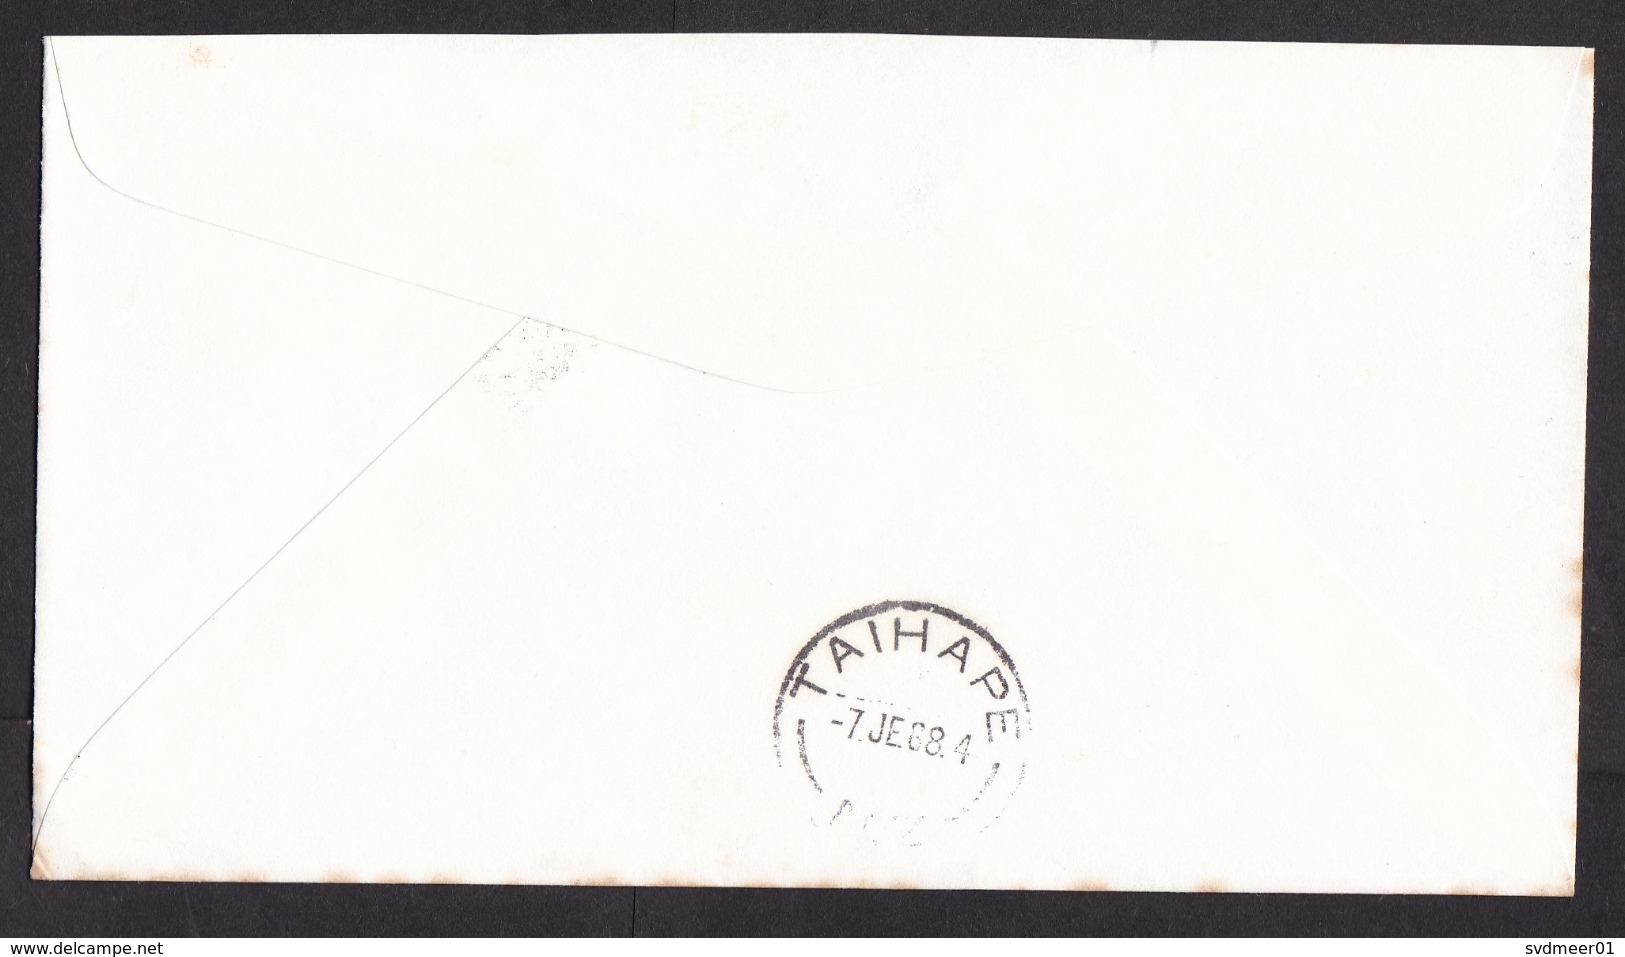 Tristan Da Cunha: Cover To New Zealand, 1968, 1 Stamp, ITU, Telecommunication, Paquebot? Ship Mail? (minor Discolouring) - Tristan Da Cunha